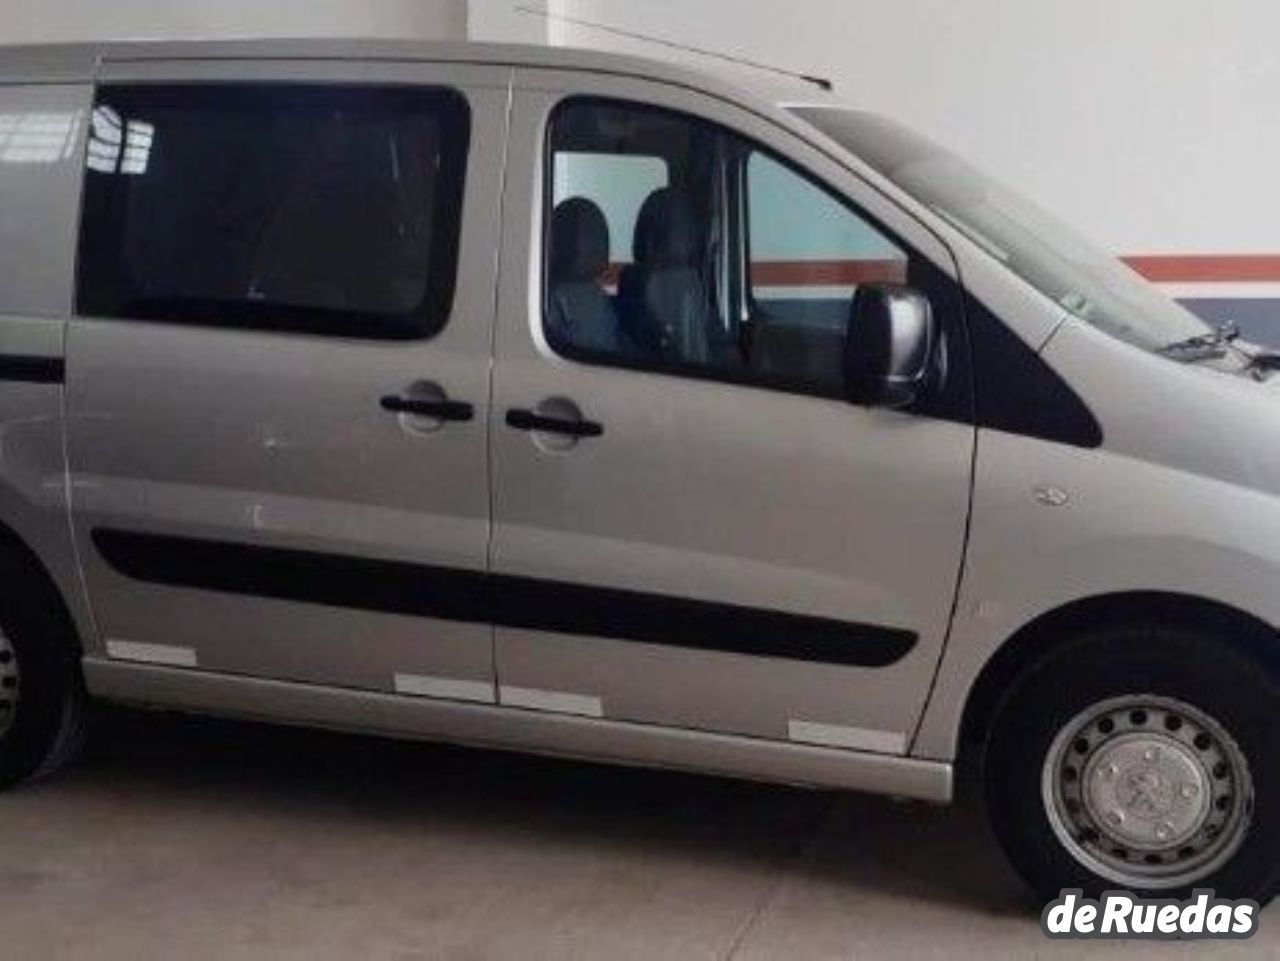 Peugeot Expert Usada en Corrientes, deRuedas